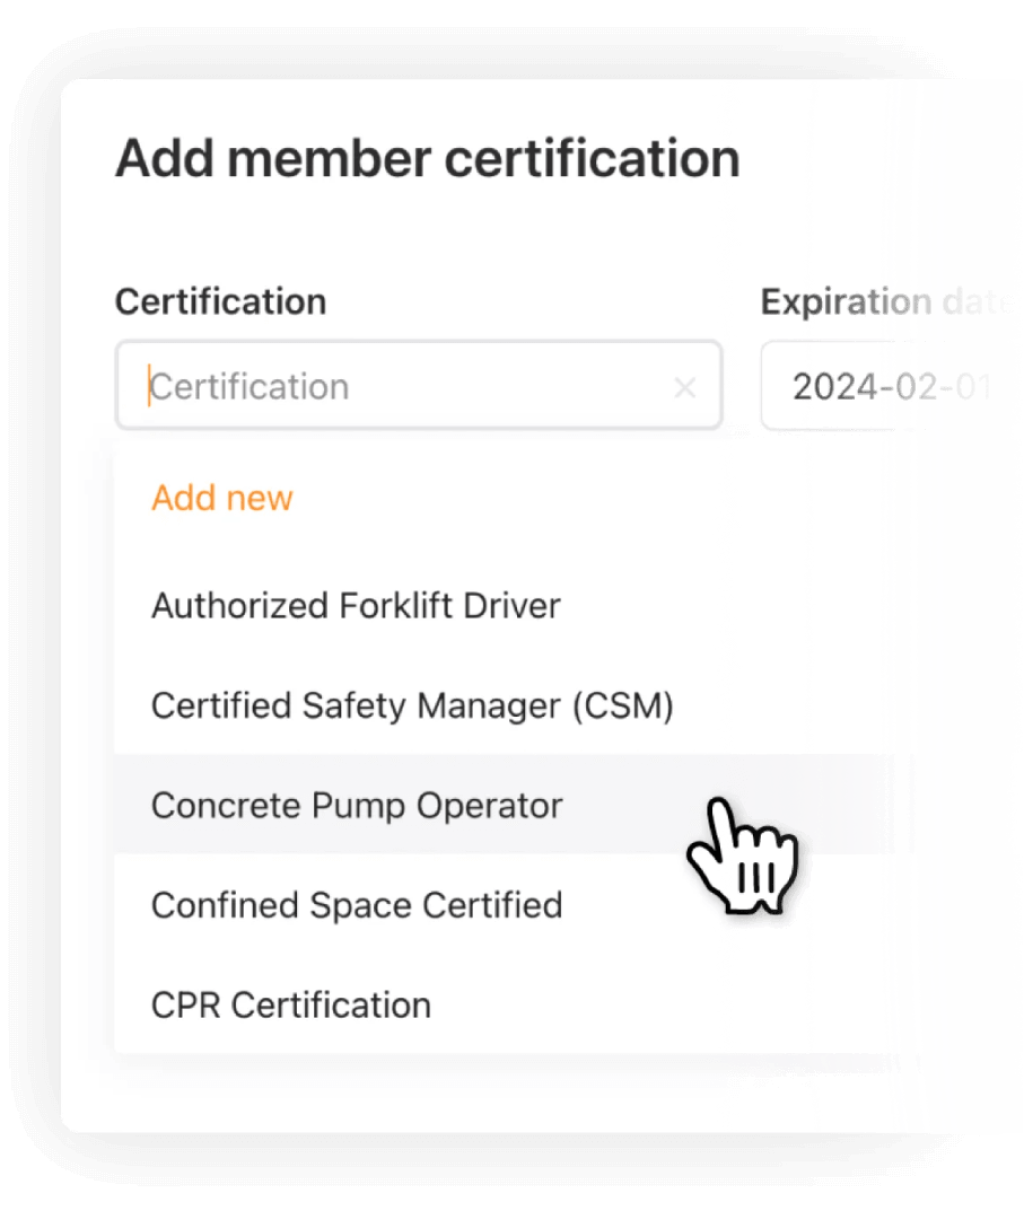 adding a member certification in Raken.